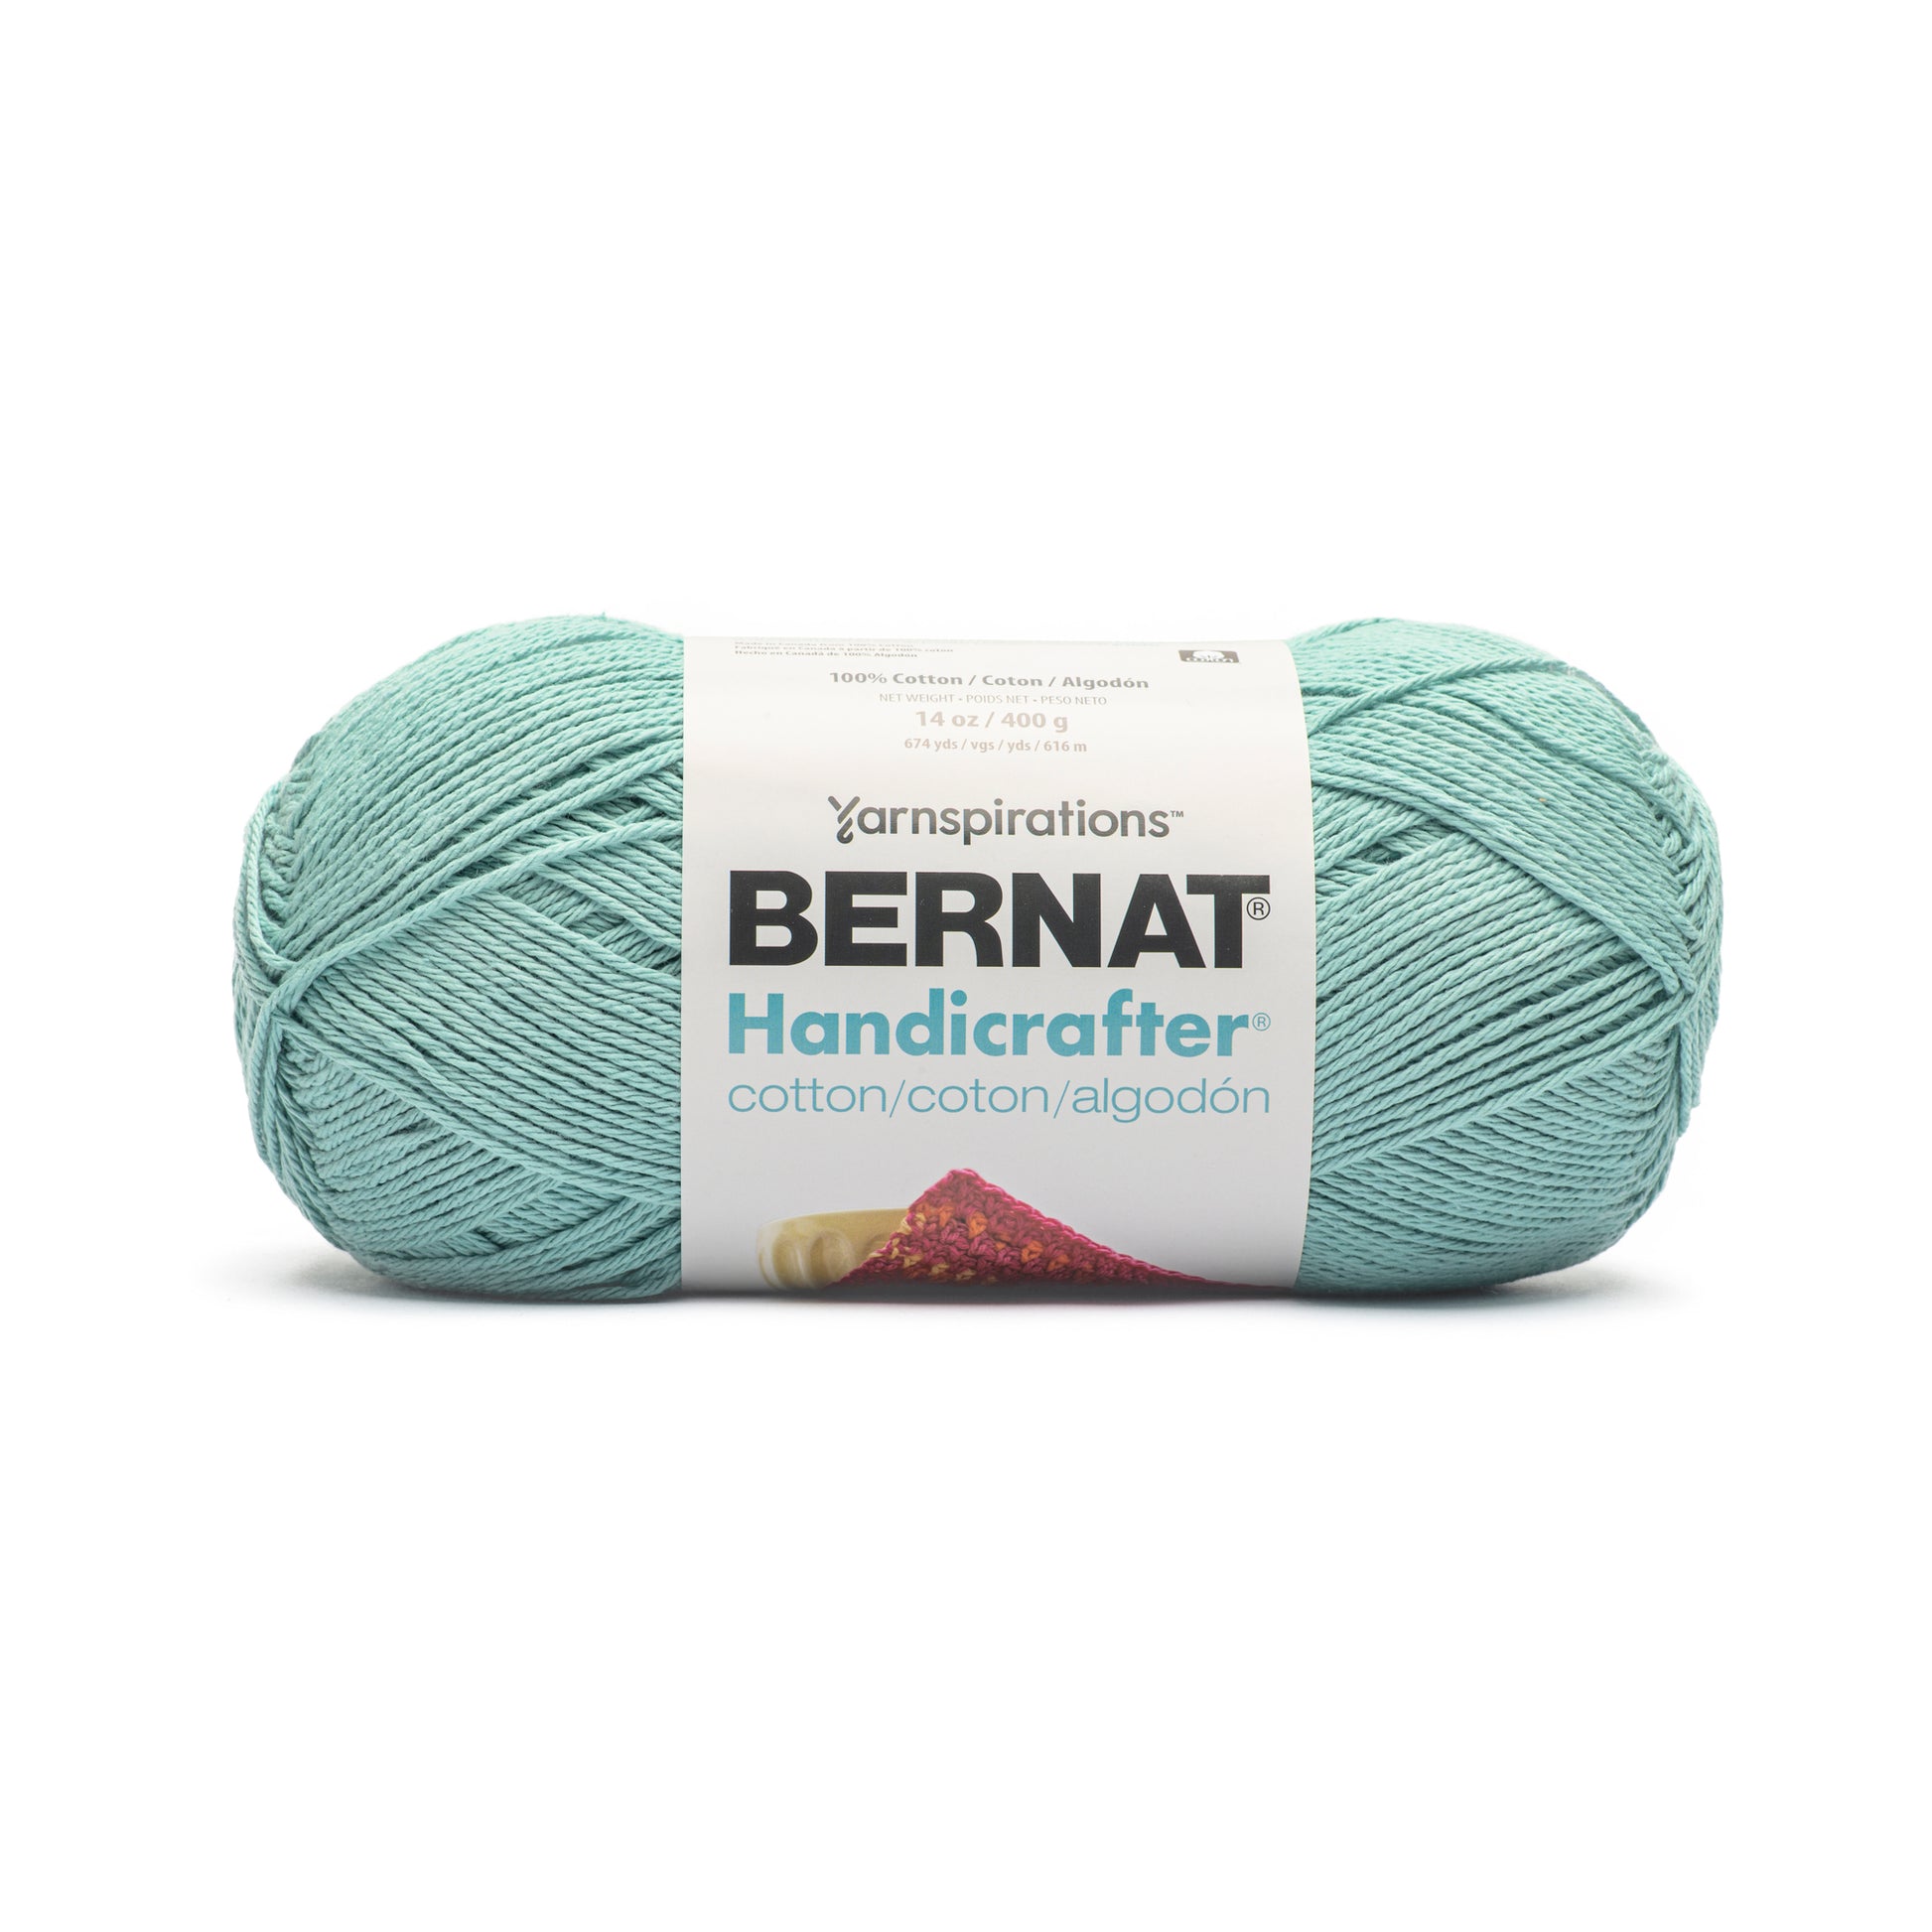 Bernat Handicrafter Cotton Yarn (400g/14oz) Sky